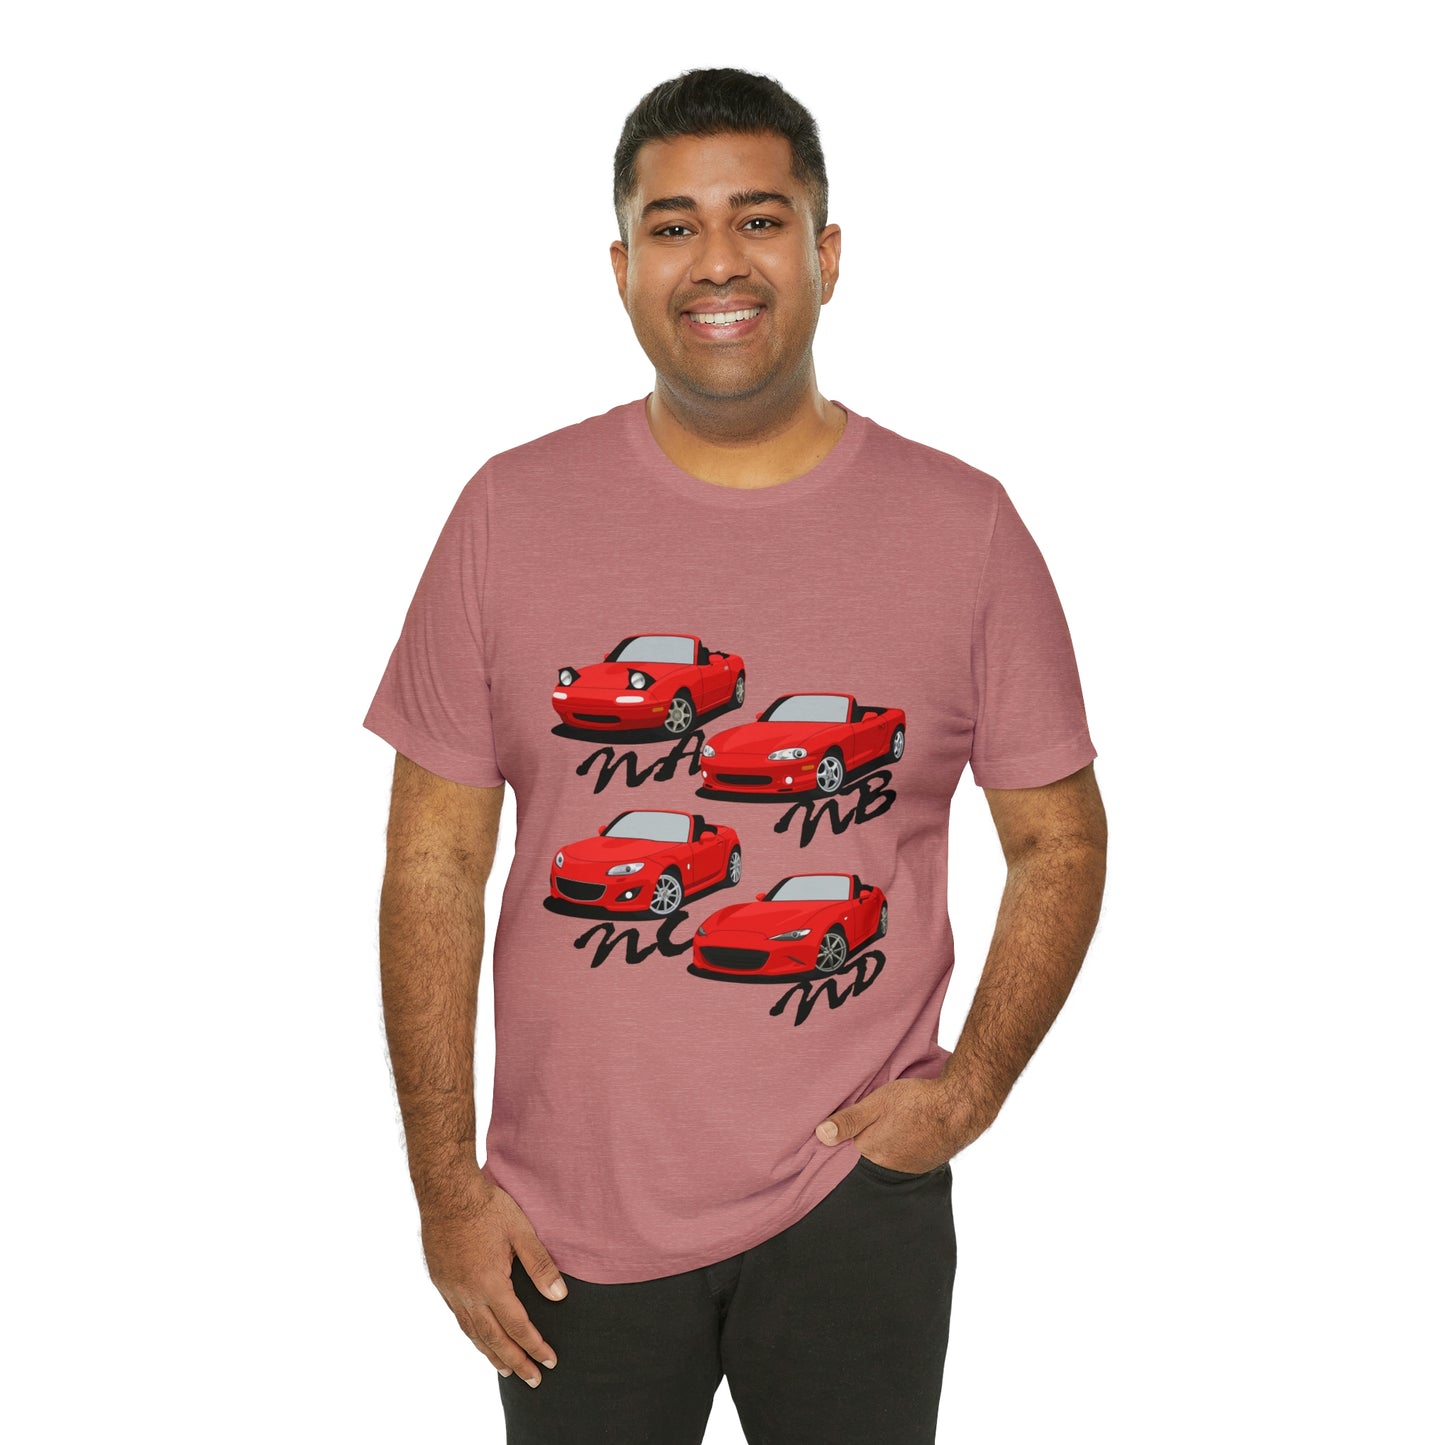 JDM Car Inspired T Shirt 29.